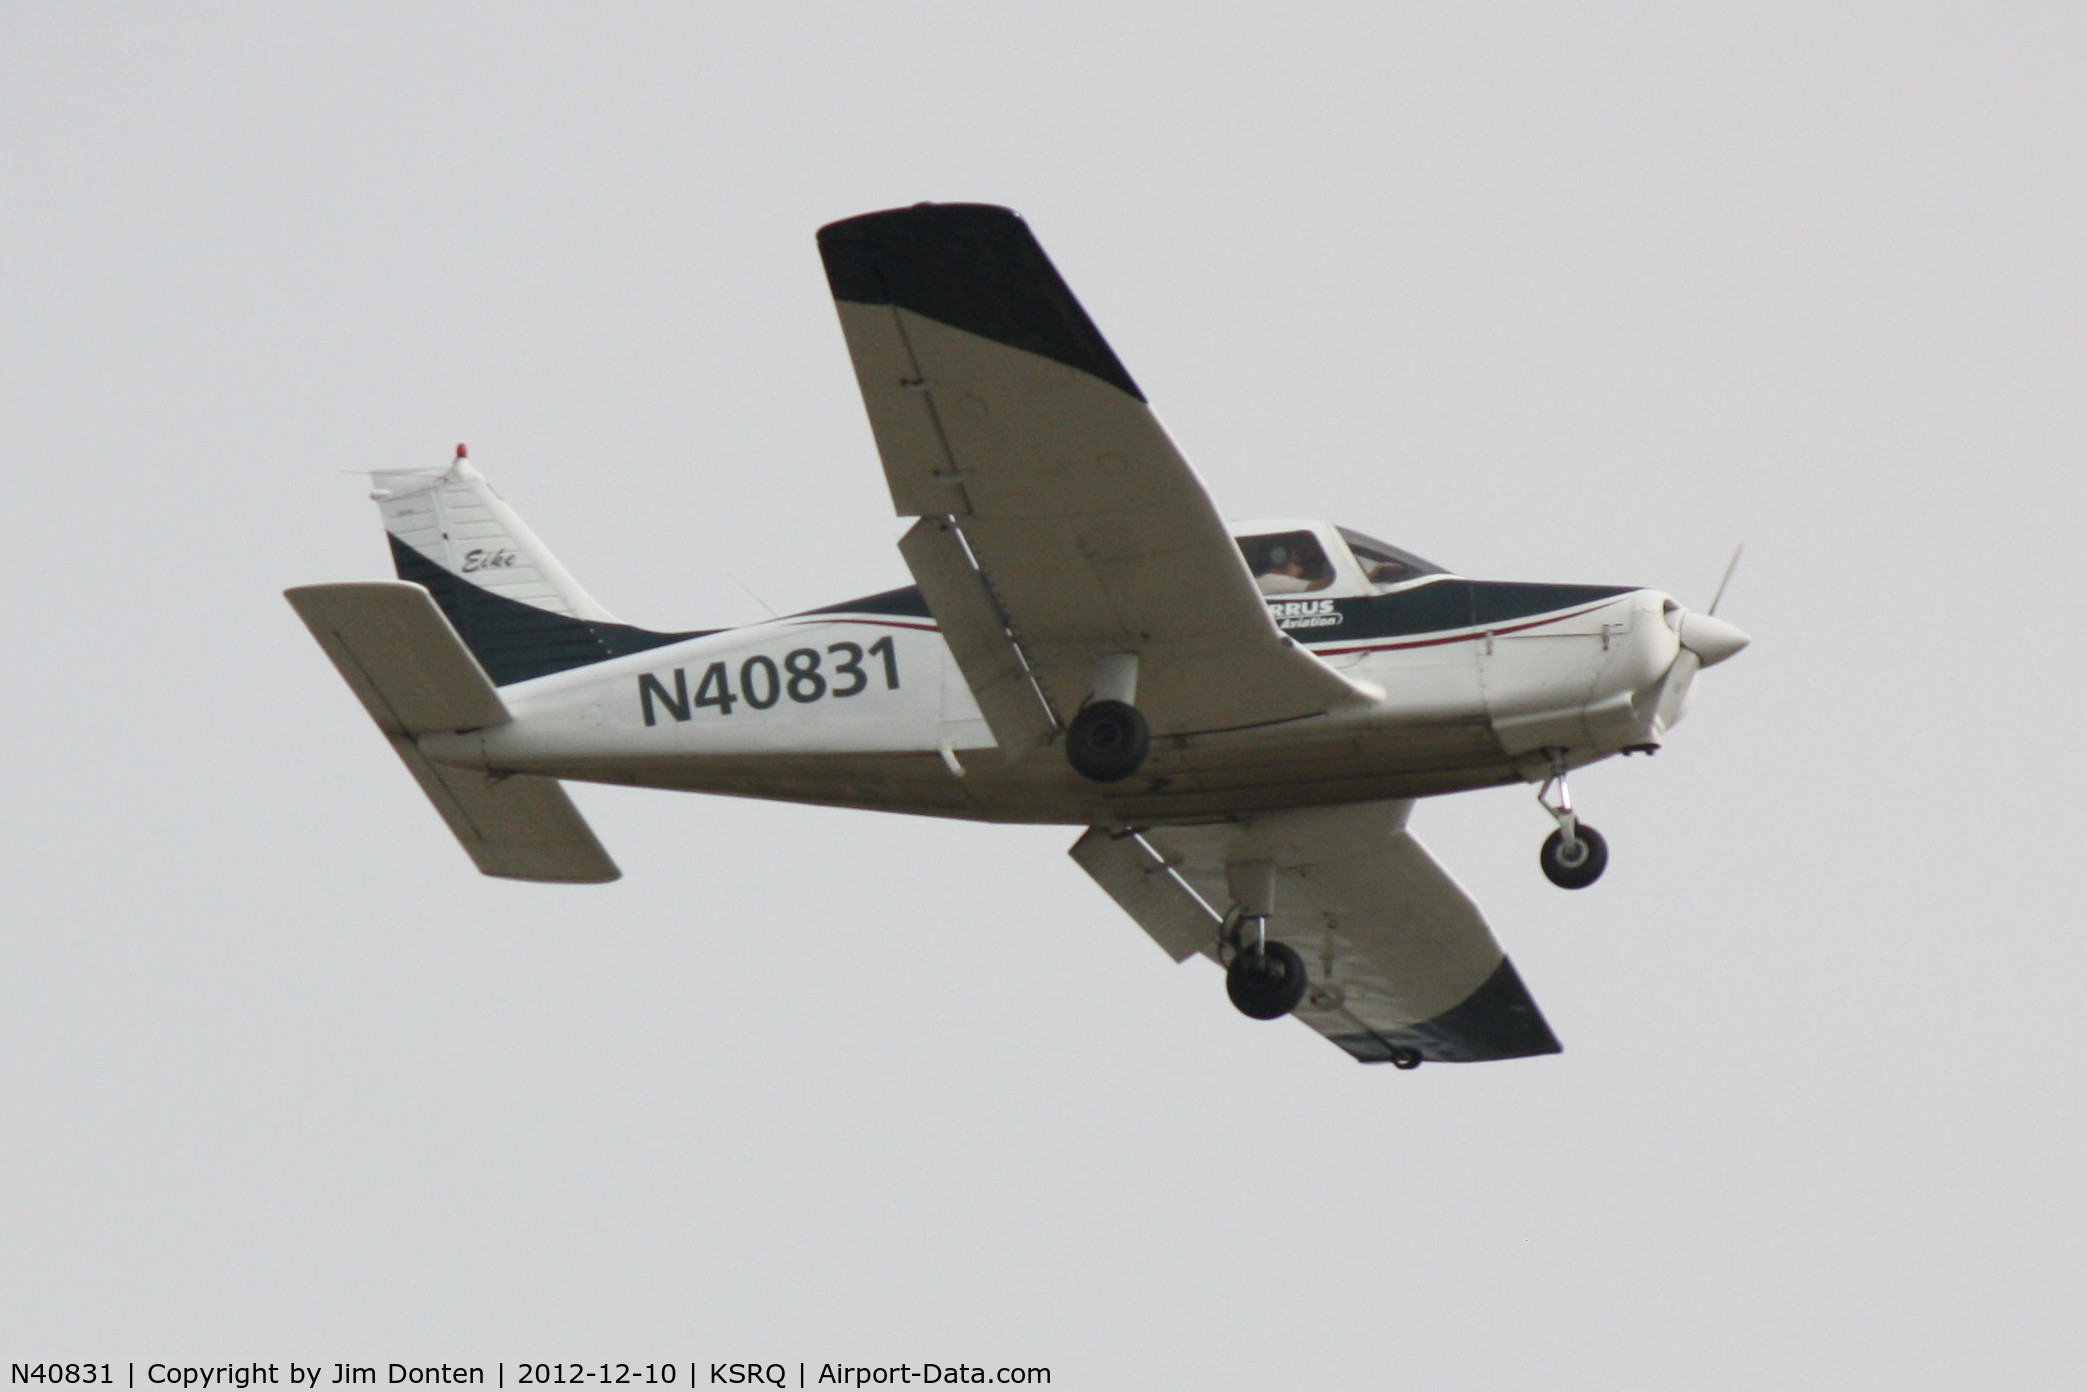 N40831, 1973 Piper PA-28-151 C/N 28-7415092, Piper Cherokee (N40831) arrives at Sarasota-Bradenton International Airport